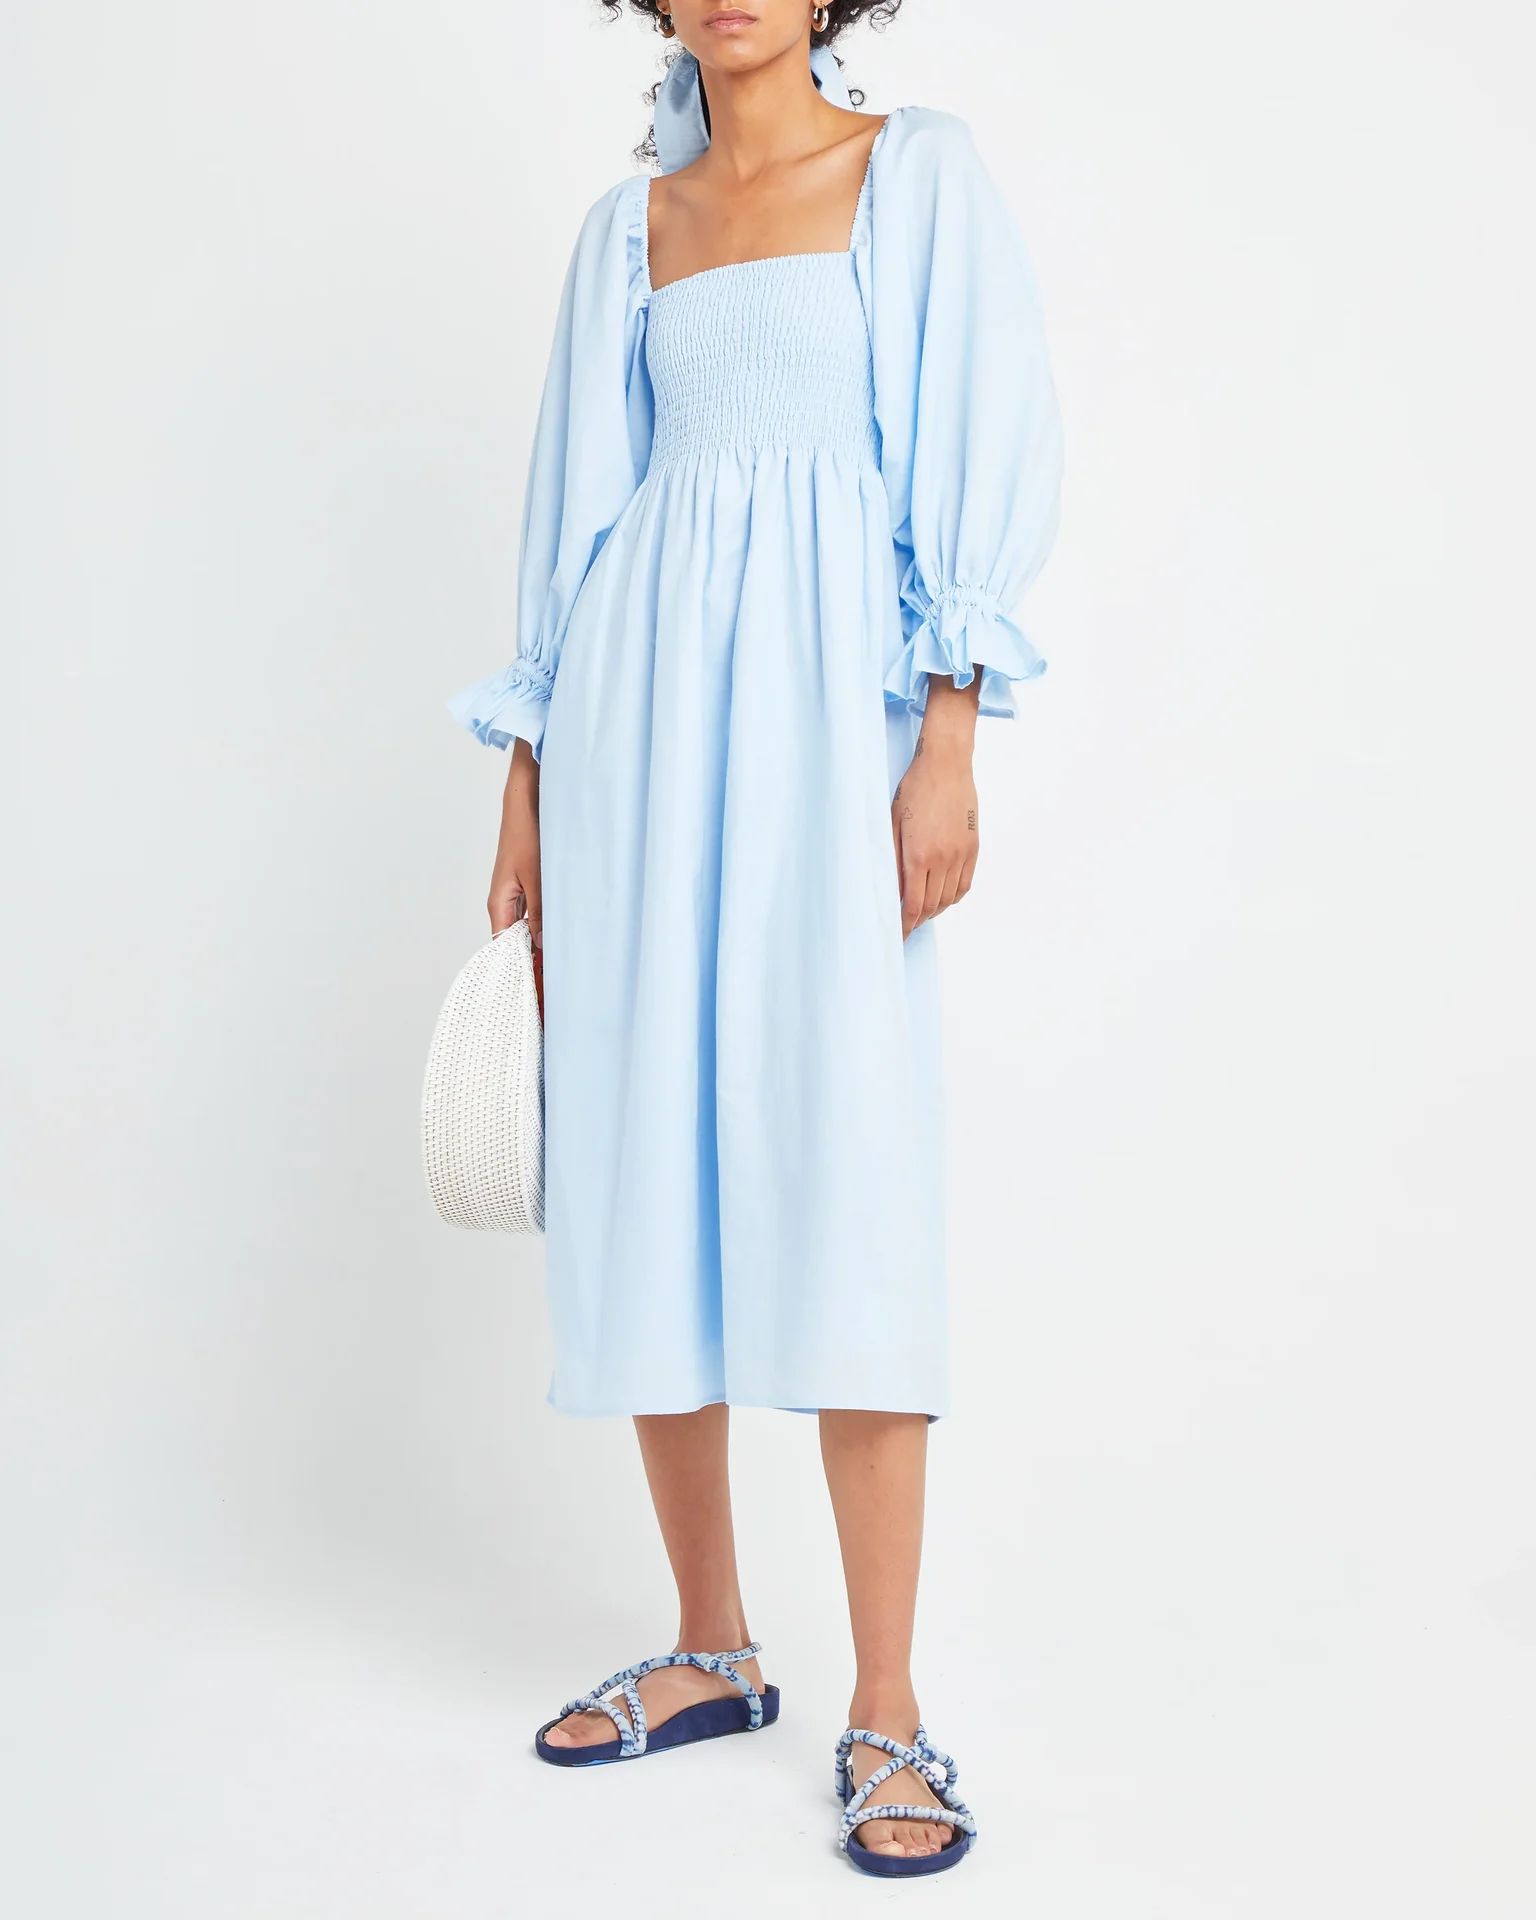 Few Moda o.p.t. Athena Dress - Blue | Verishop